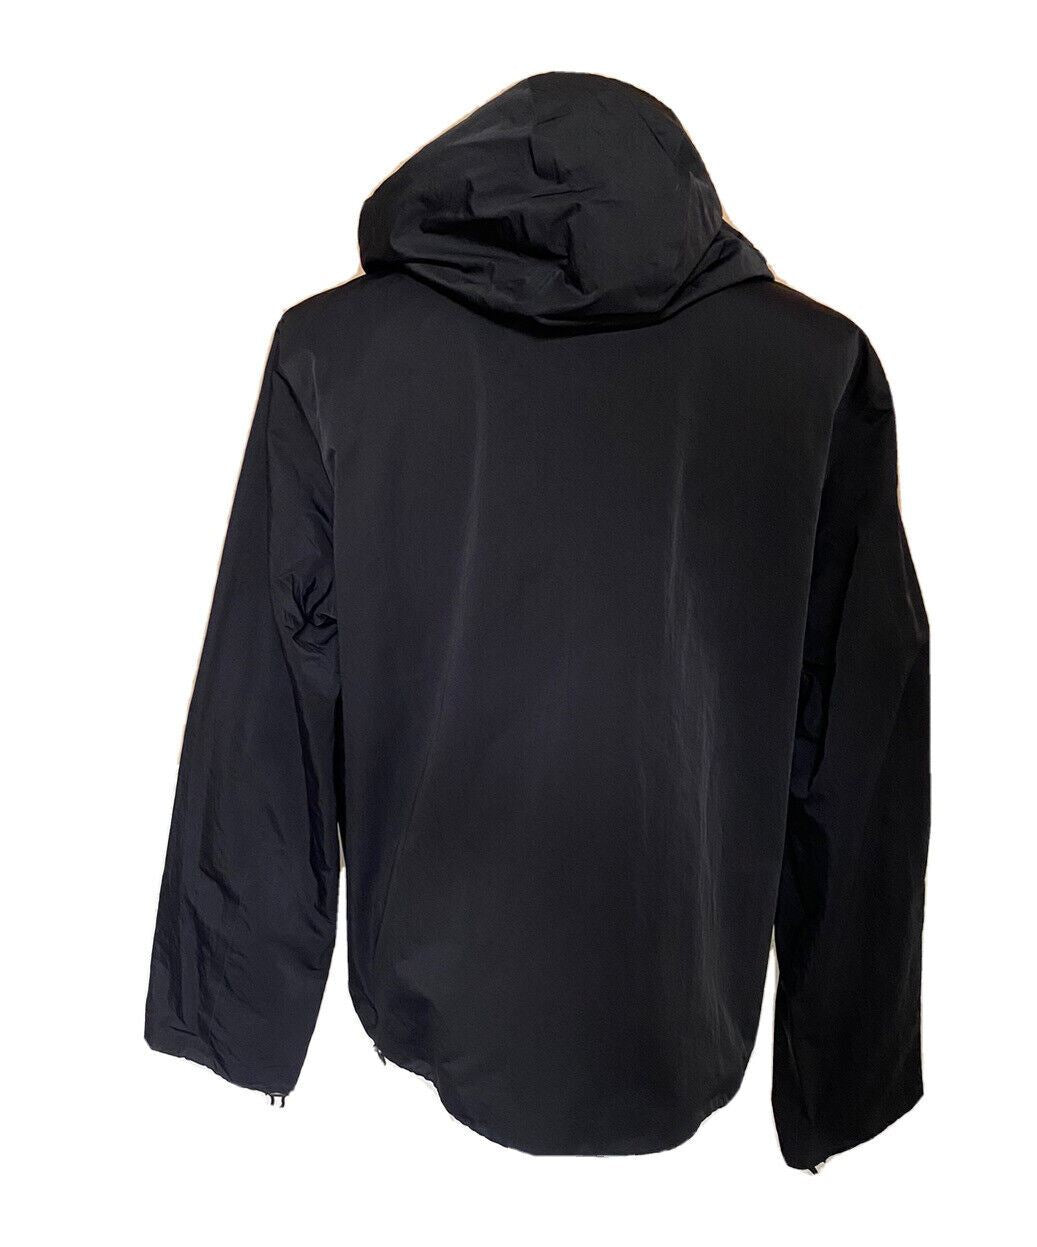 NWT $1850 Bottega Veneta Men's Blouson Tech Nylon Black Jacket with Hoodie 42 US